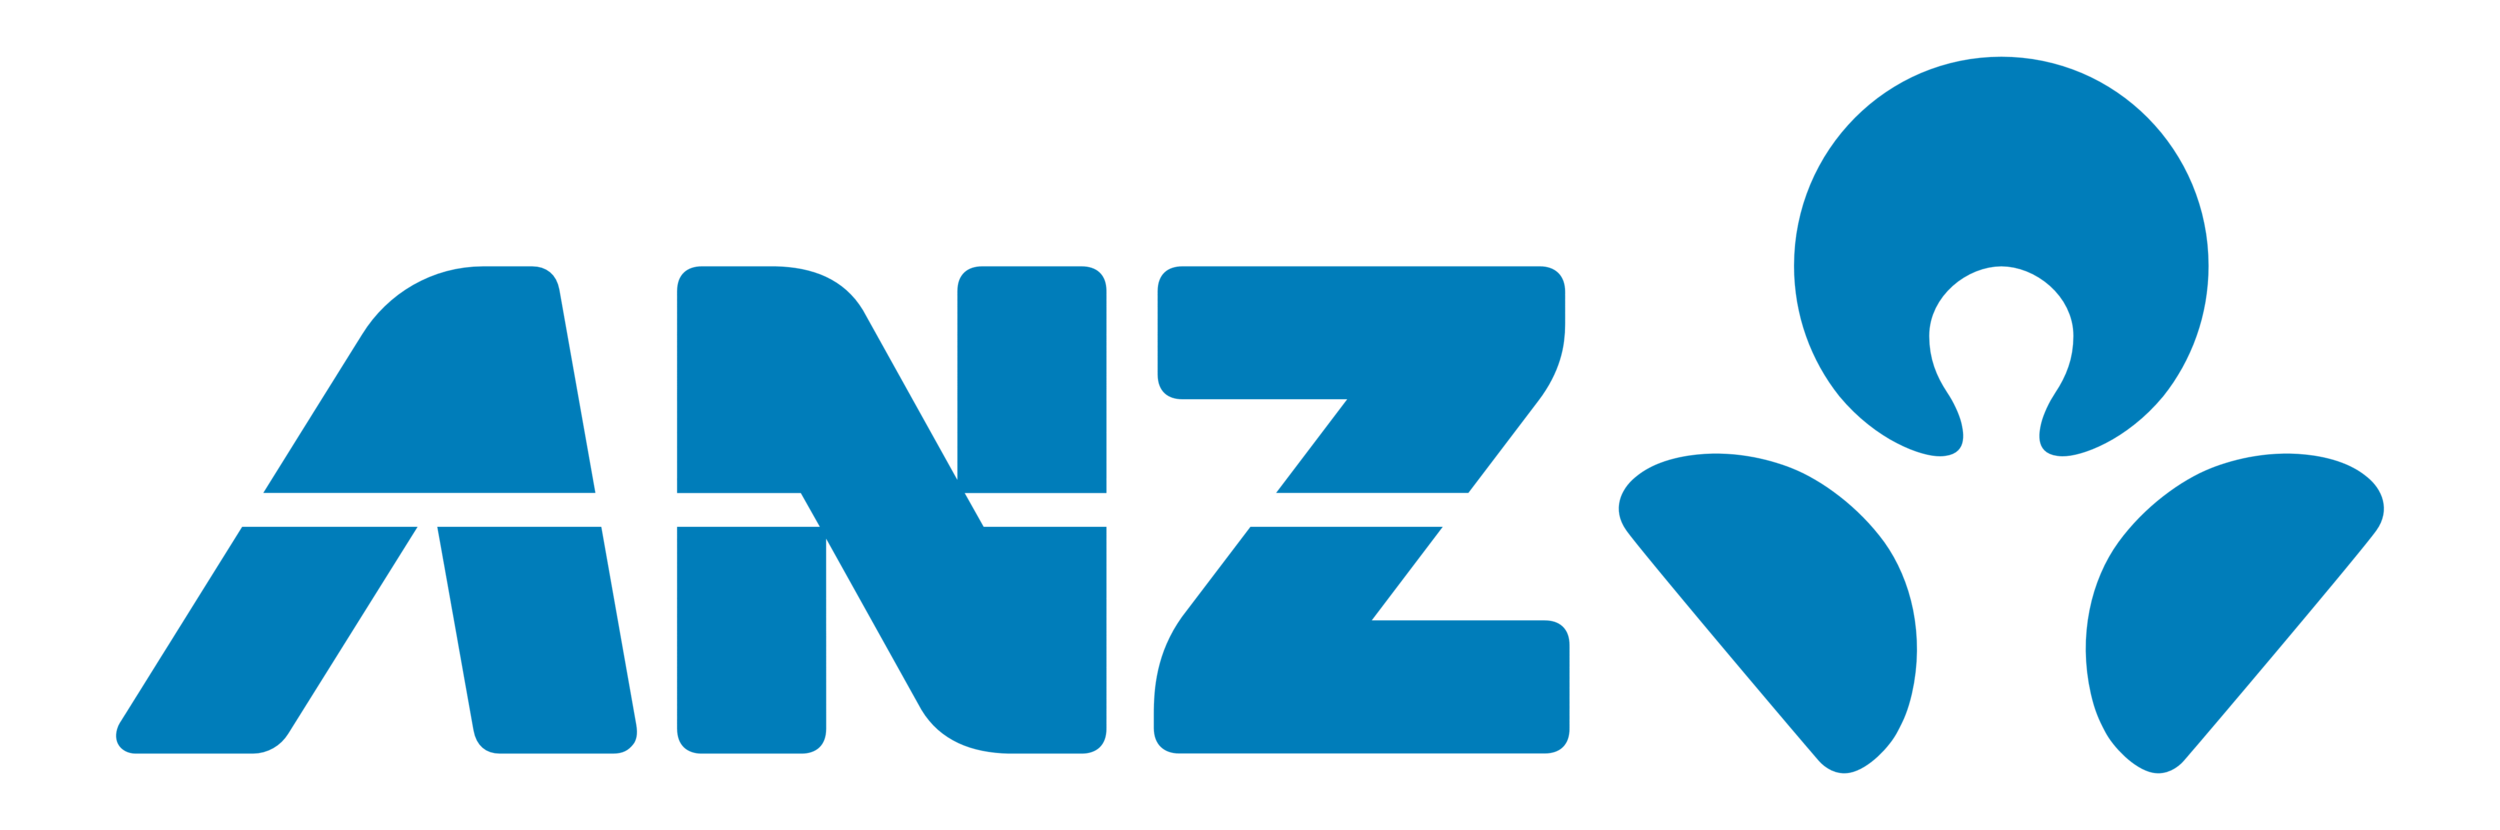 ANZ_logo.png